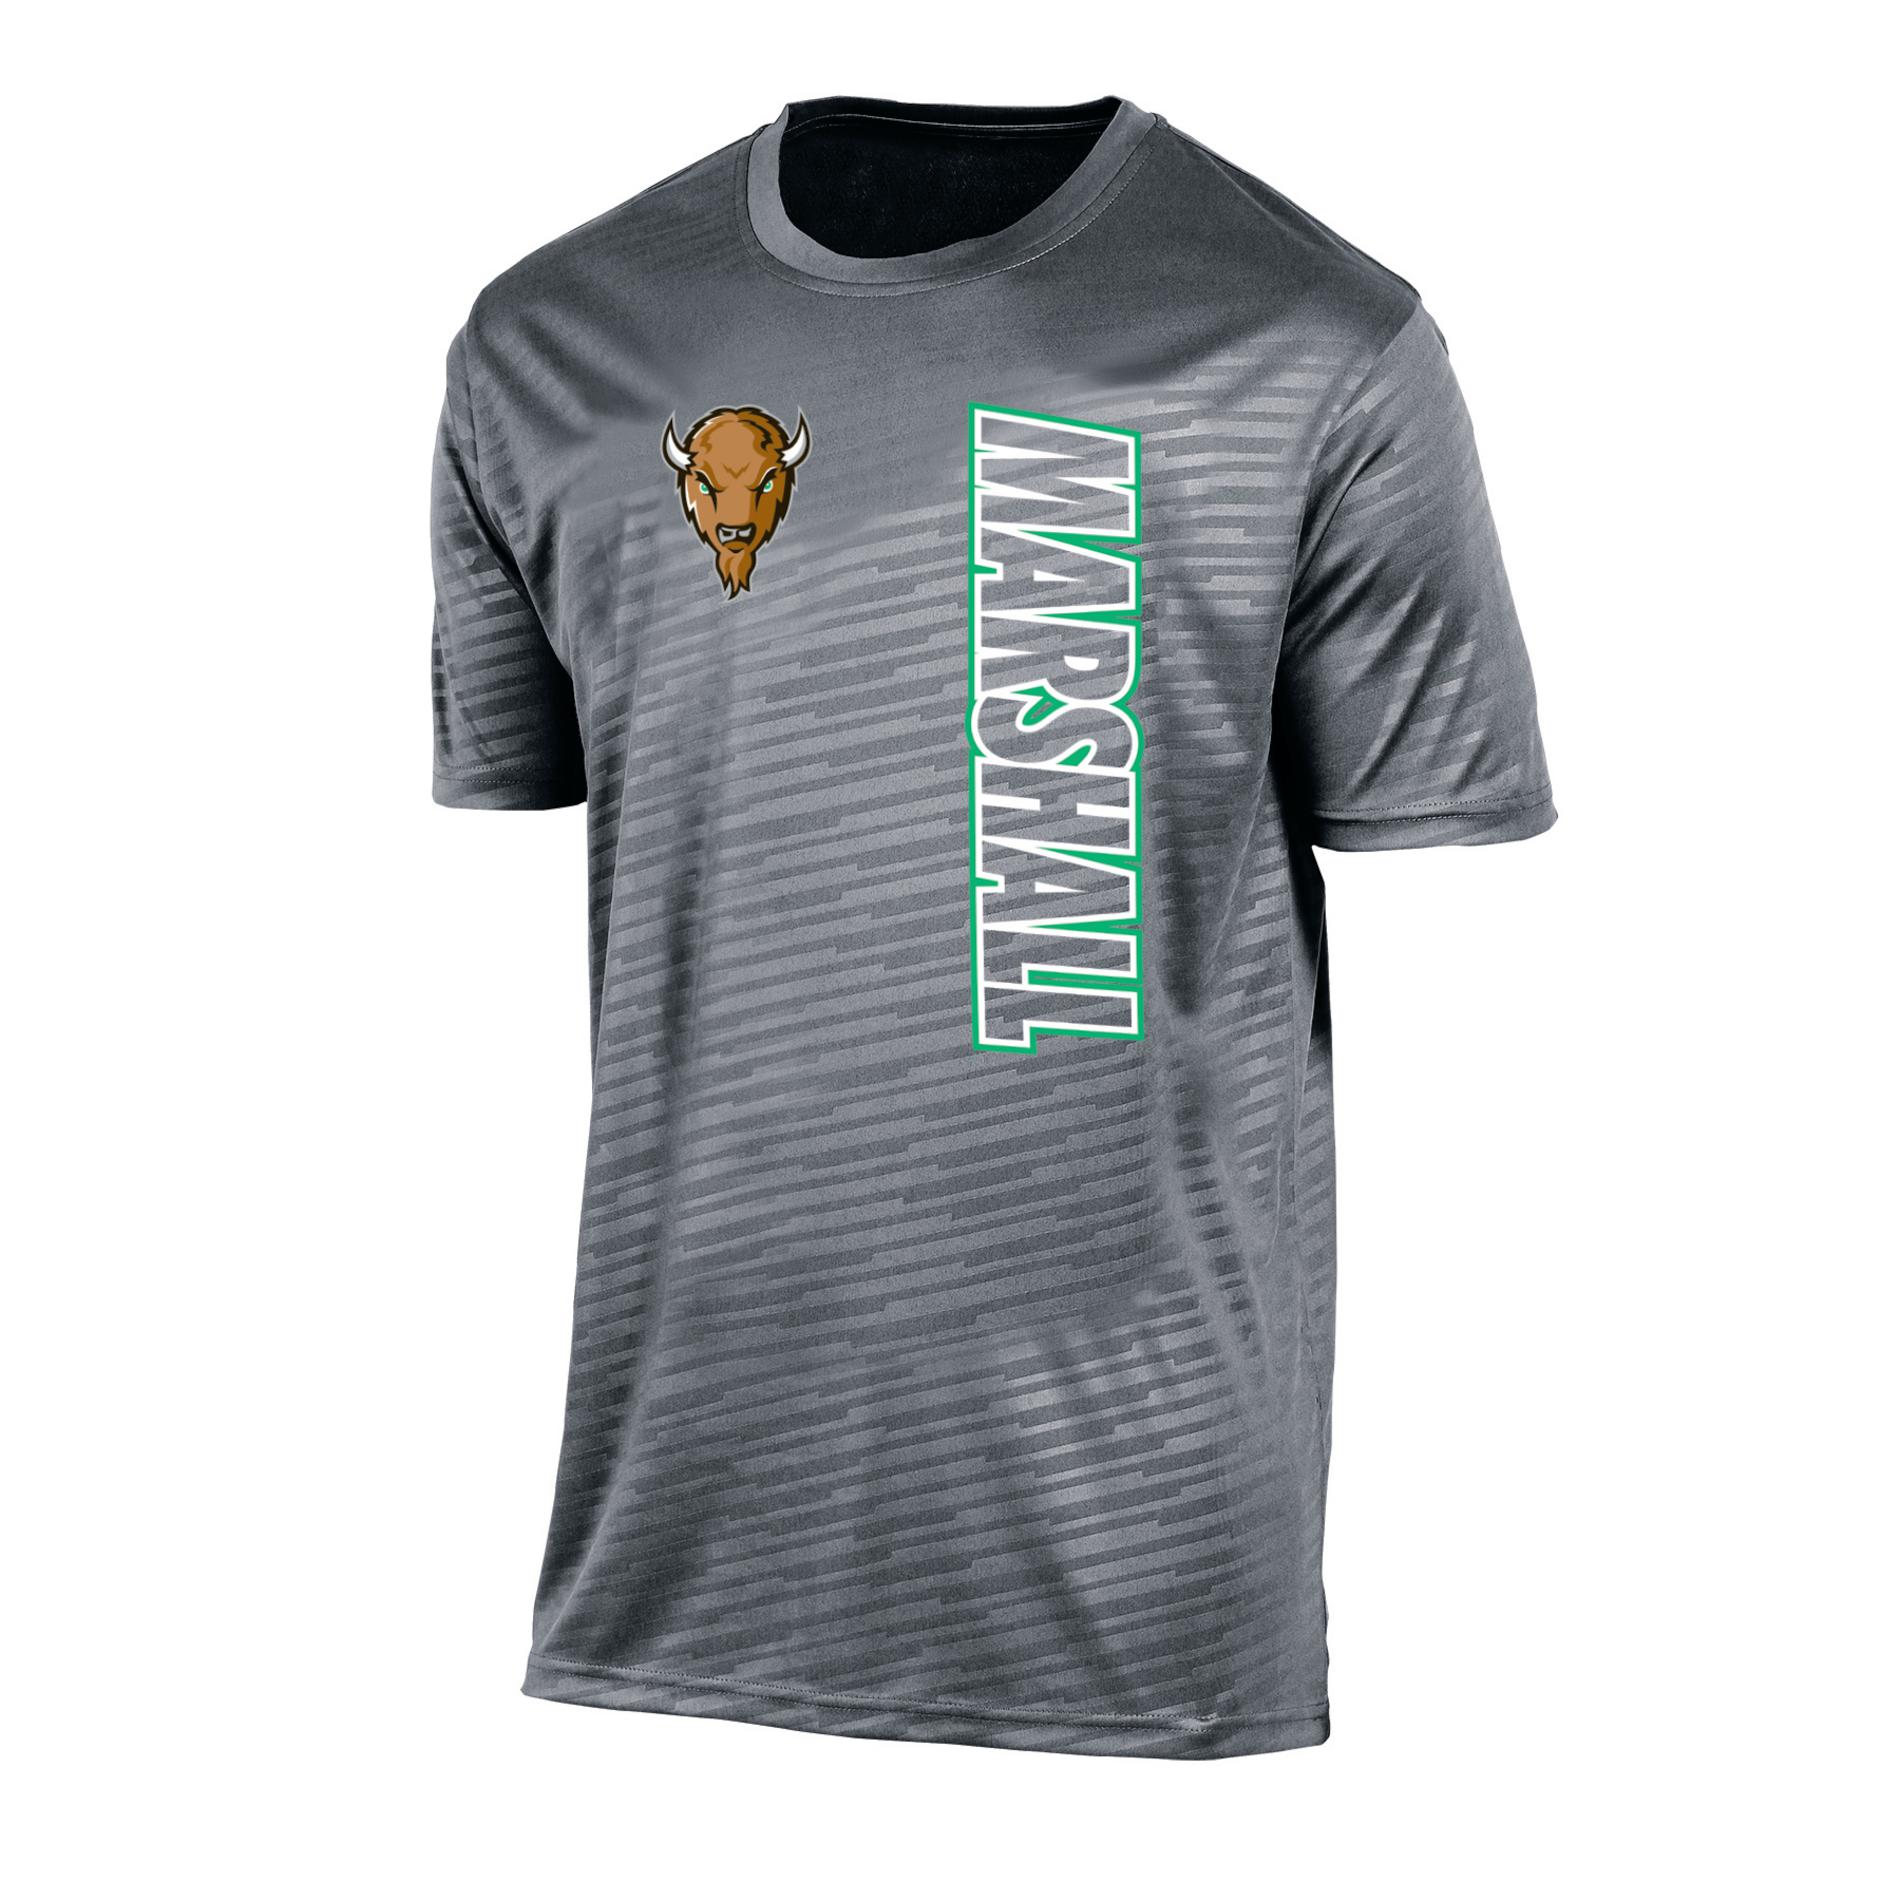 NCAA Men's Performance T-Shirt - Marshall Thundering Herd